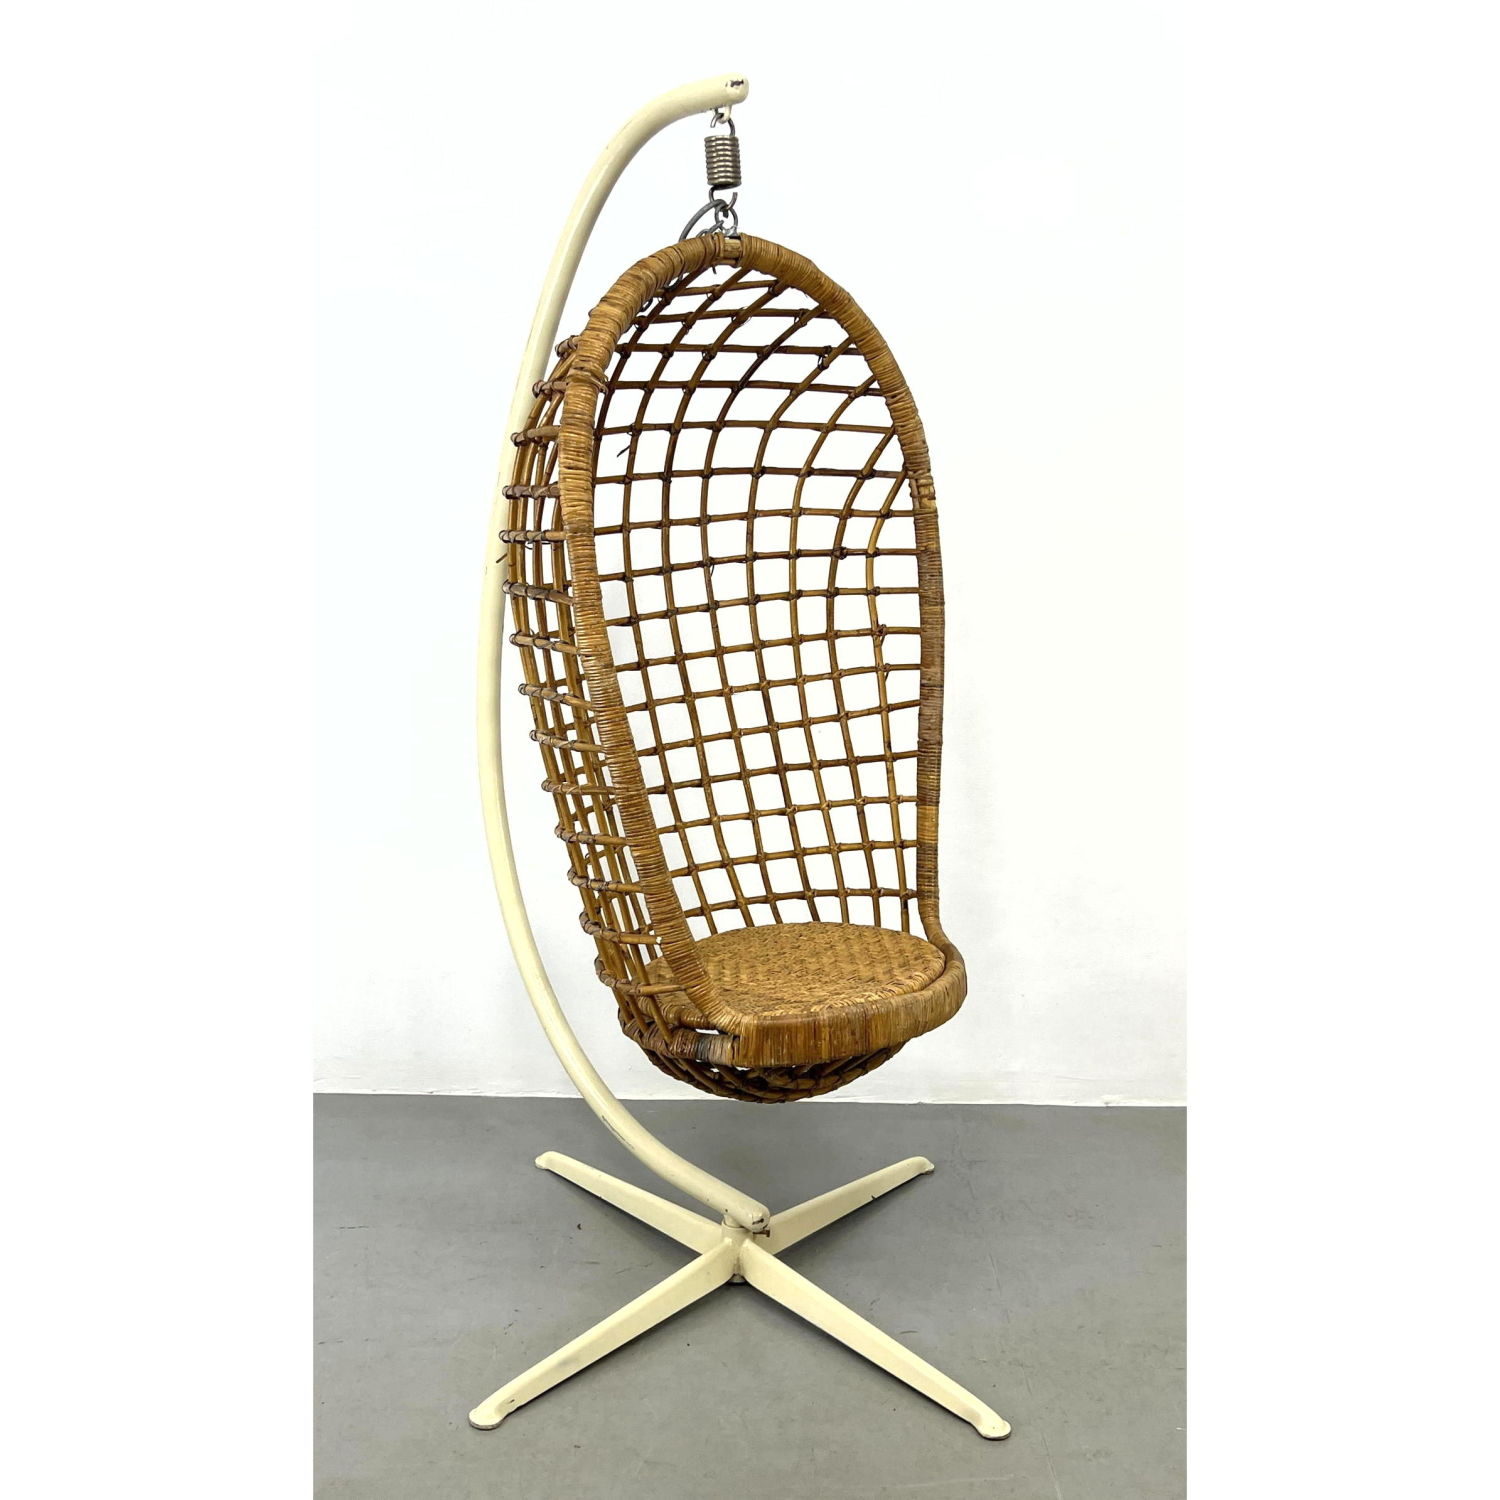 Vintage Hanging Rattan Wicker Chair 2b90cc